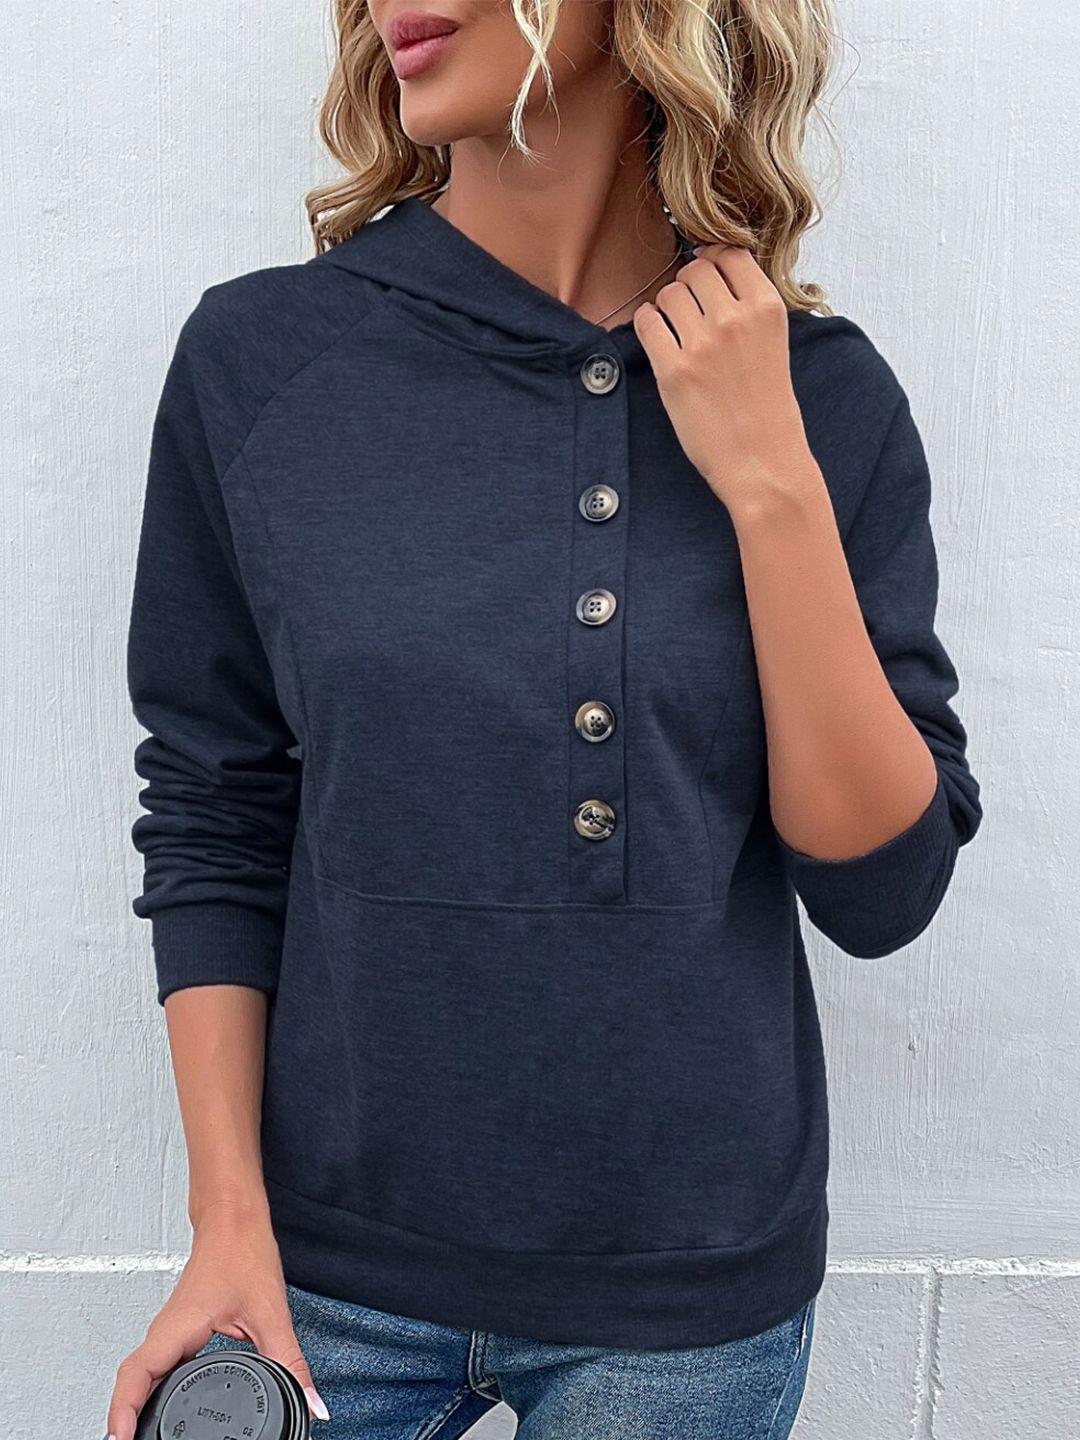 stylecast navy blue hooded long sleeves regular top